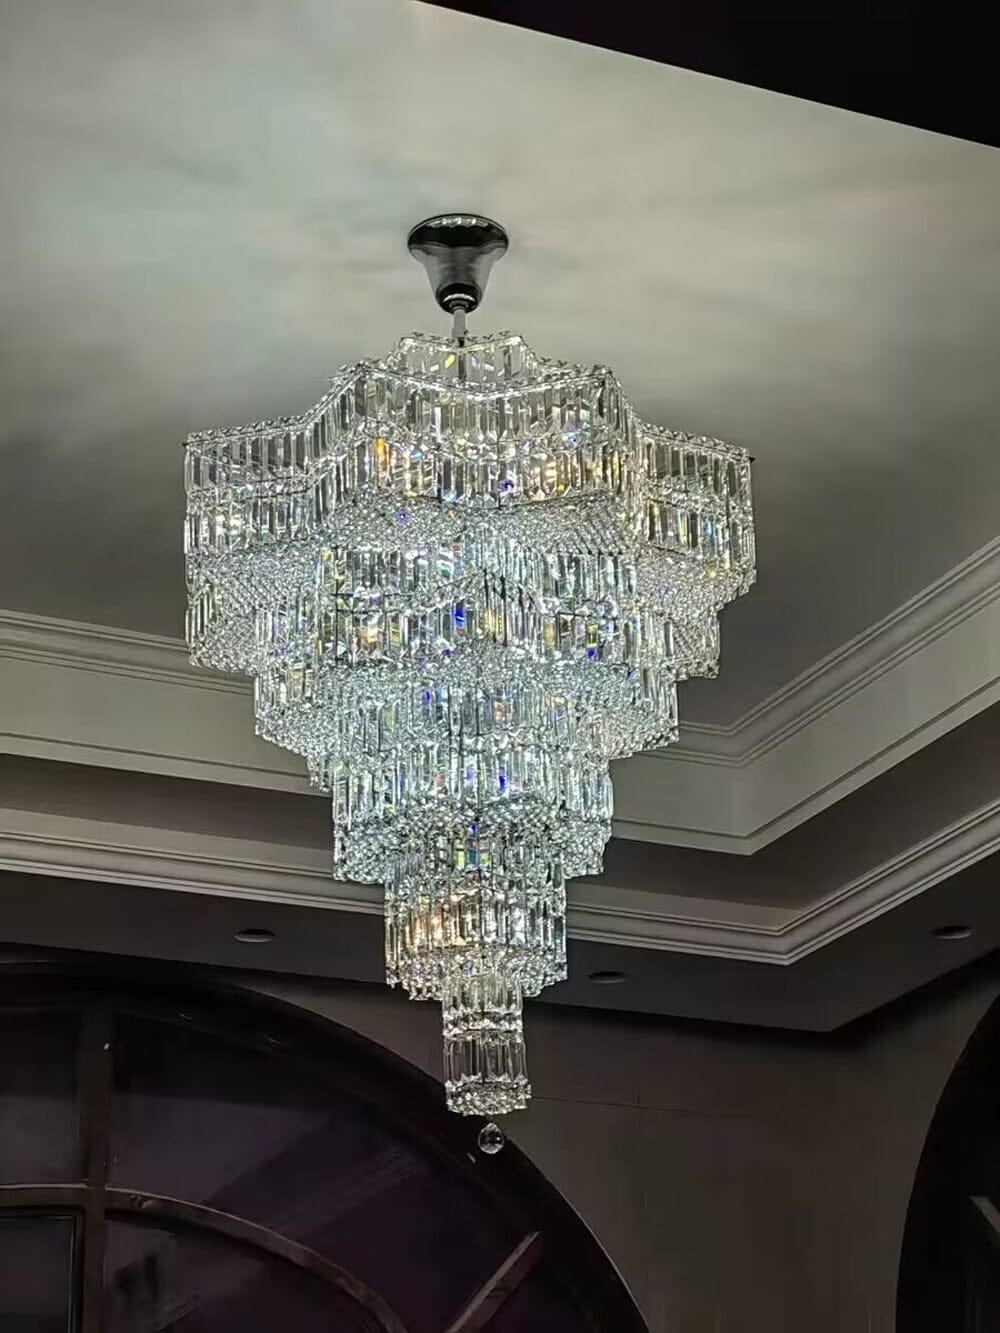 Ellison LED Luxury Cristal Villa Chandelier Marie Antonette 